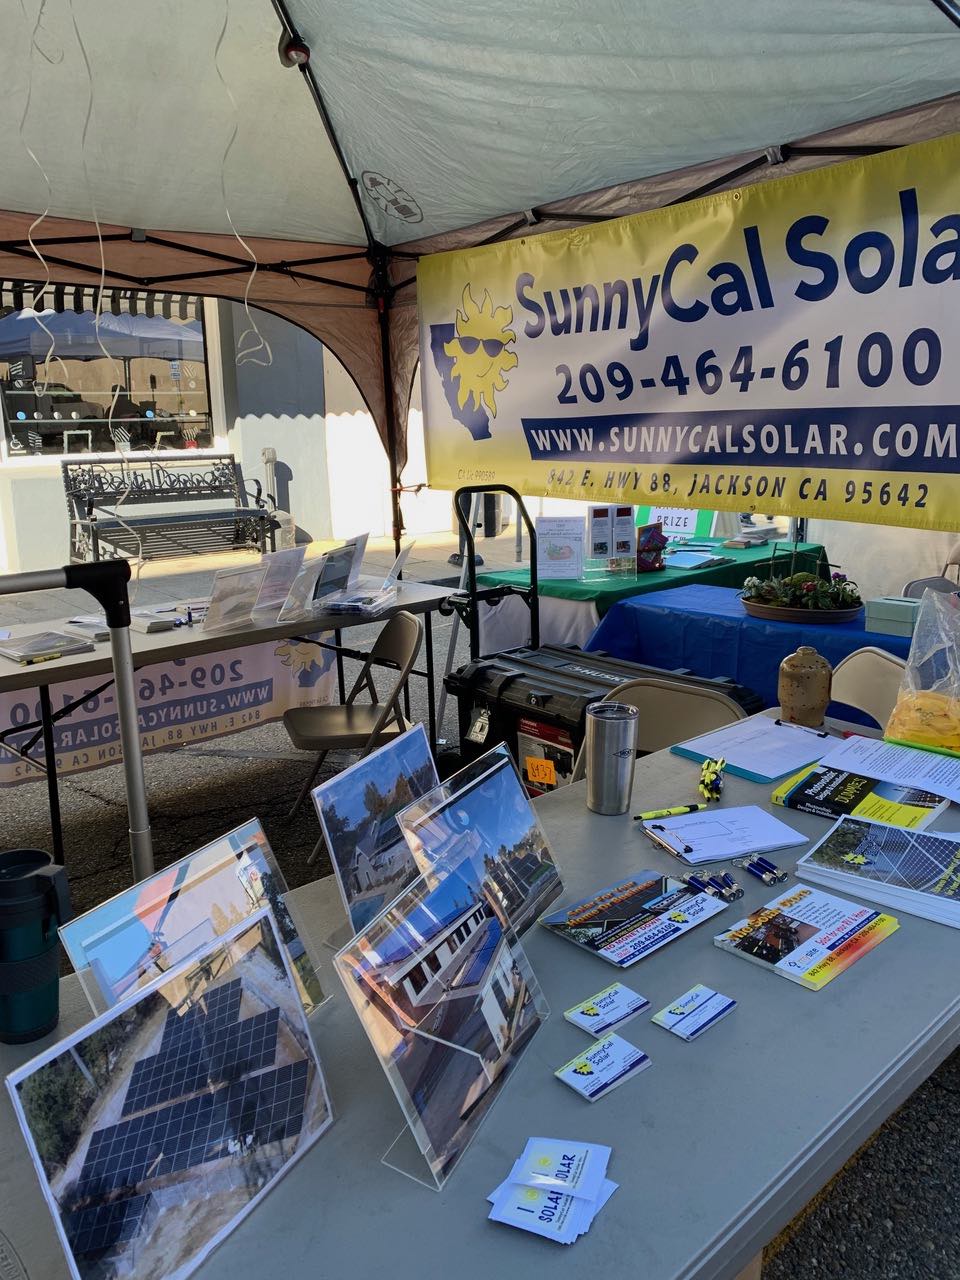 SunnyCal Solar Booth at Dandelion Days